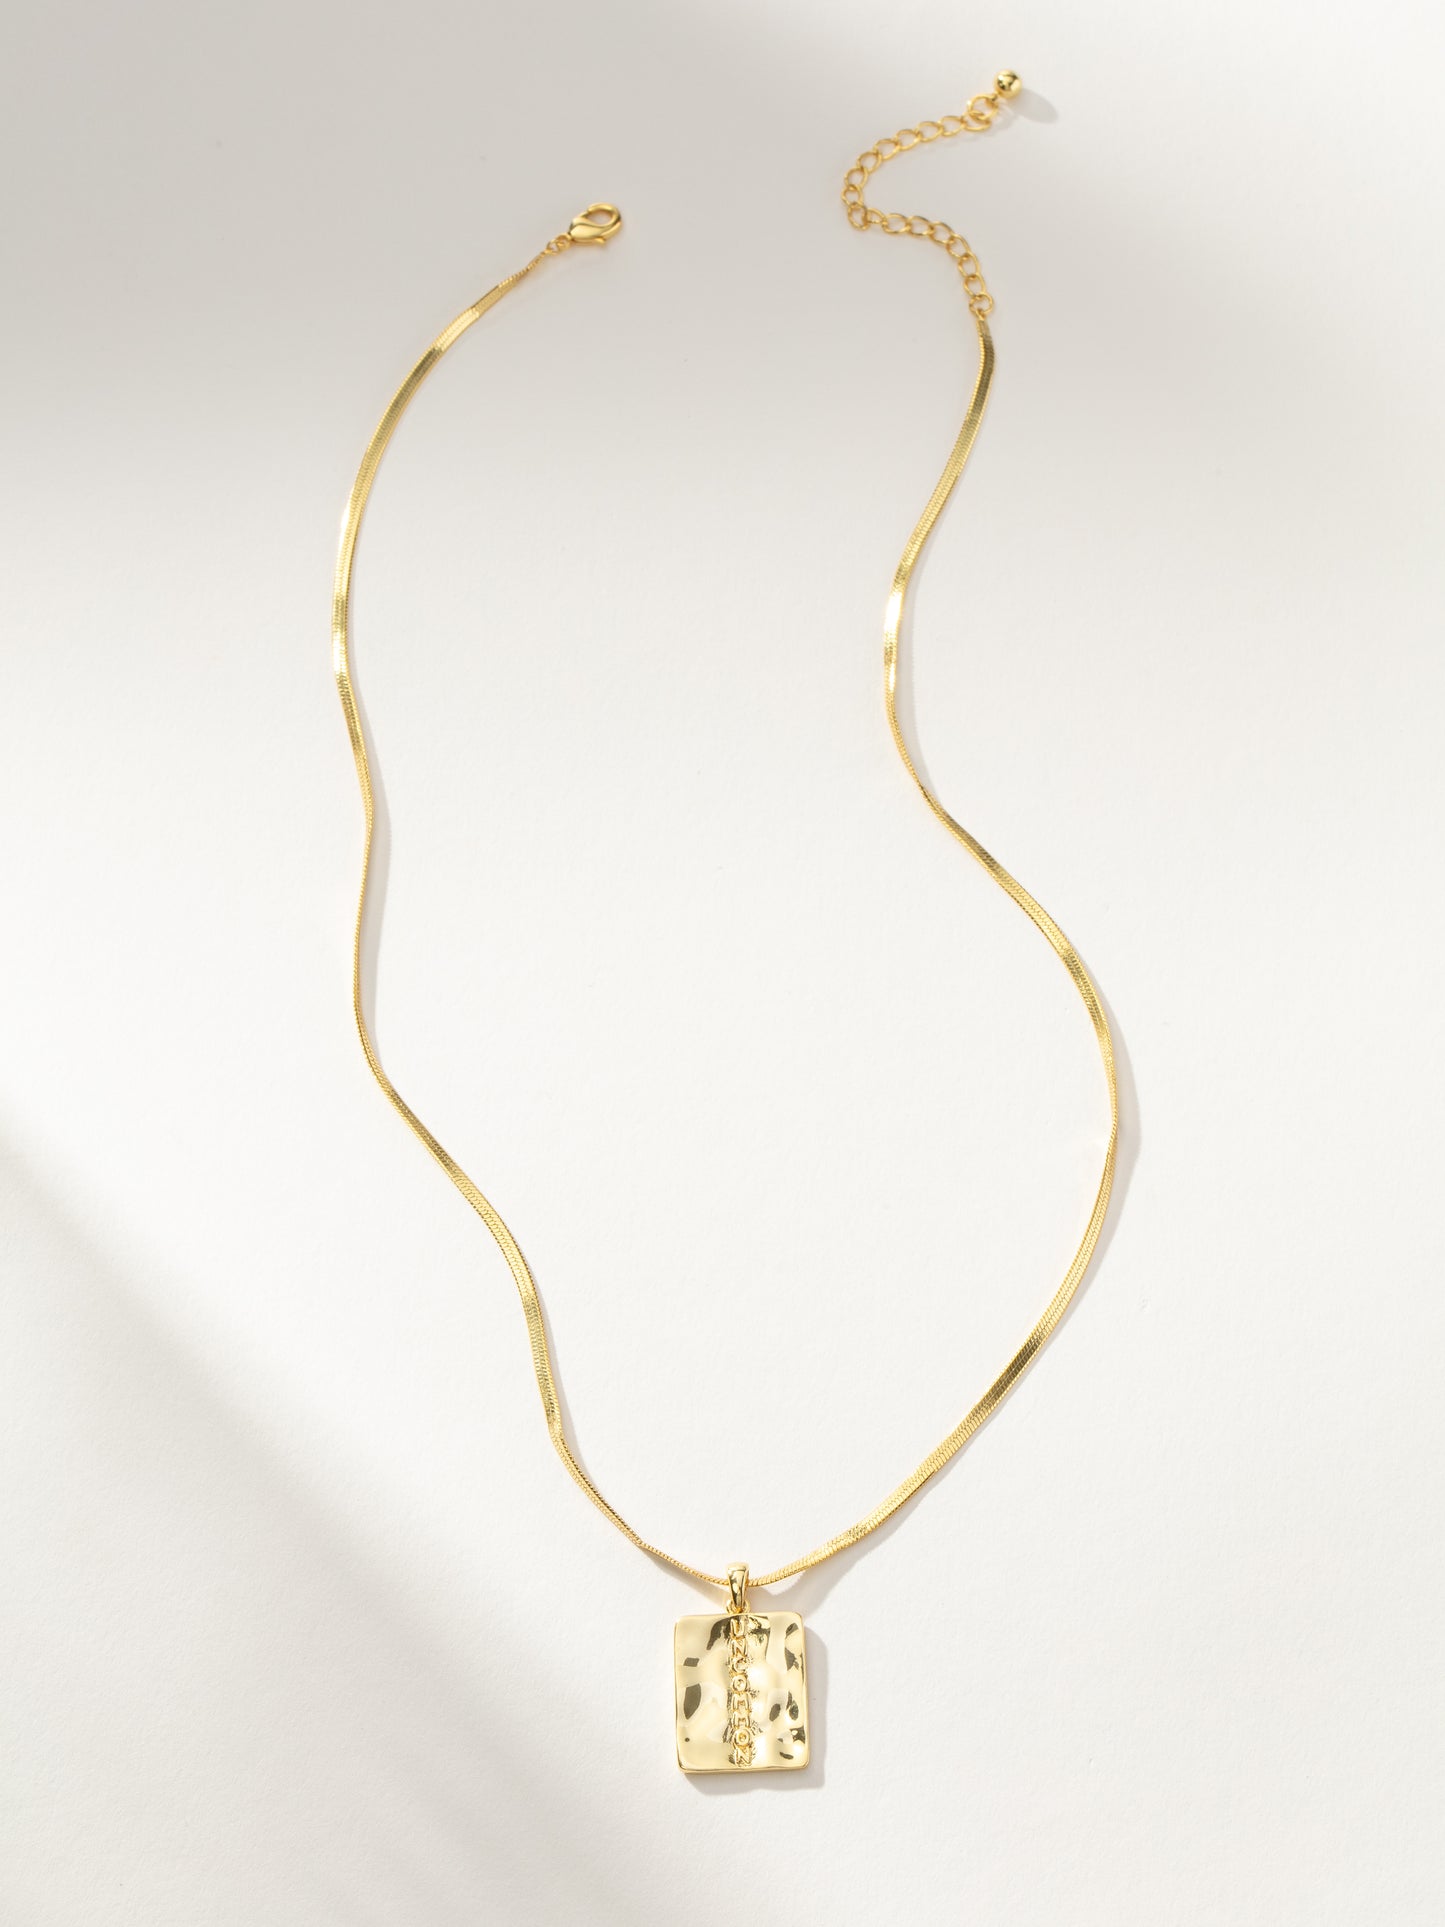 Uncommon Pendant Necklace | Gold | Product Image | Uncommon James